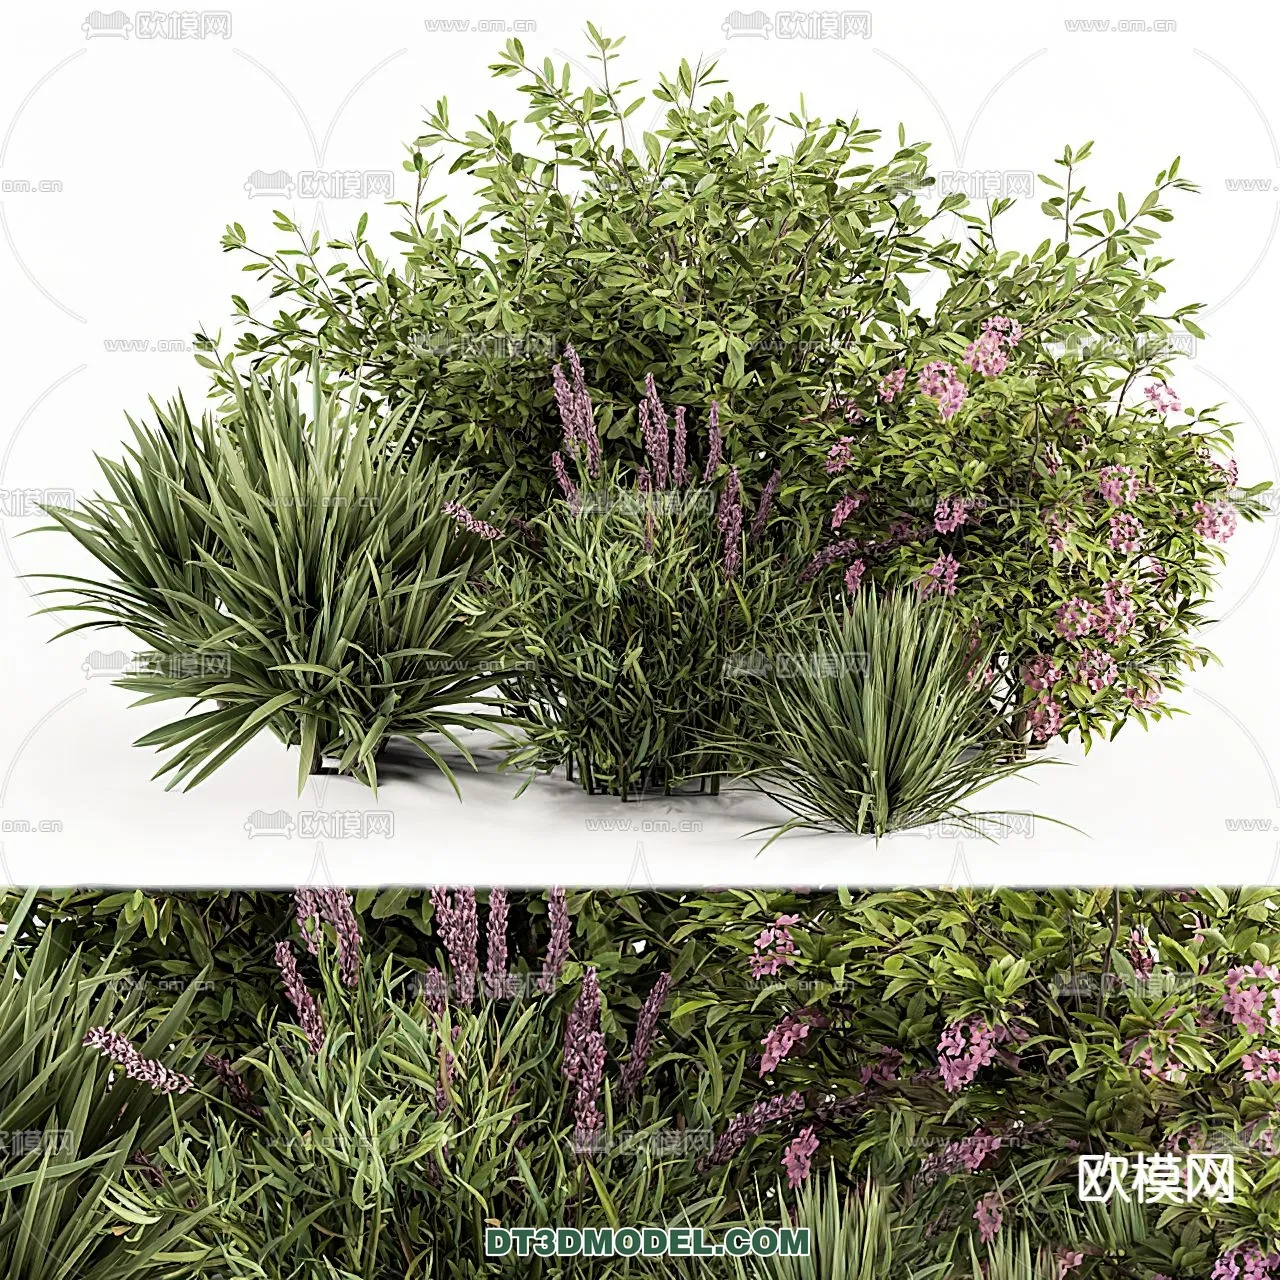 PLANTS – BUSH – VRAY / CORONA – 3D MODEL – 261